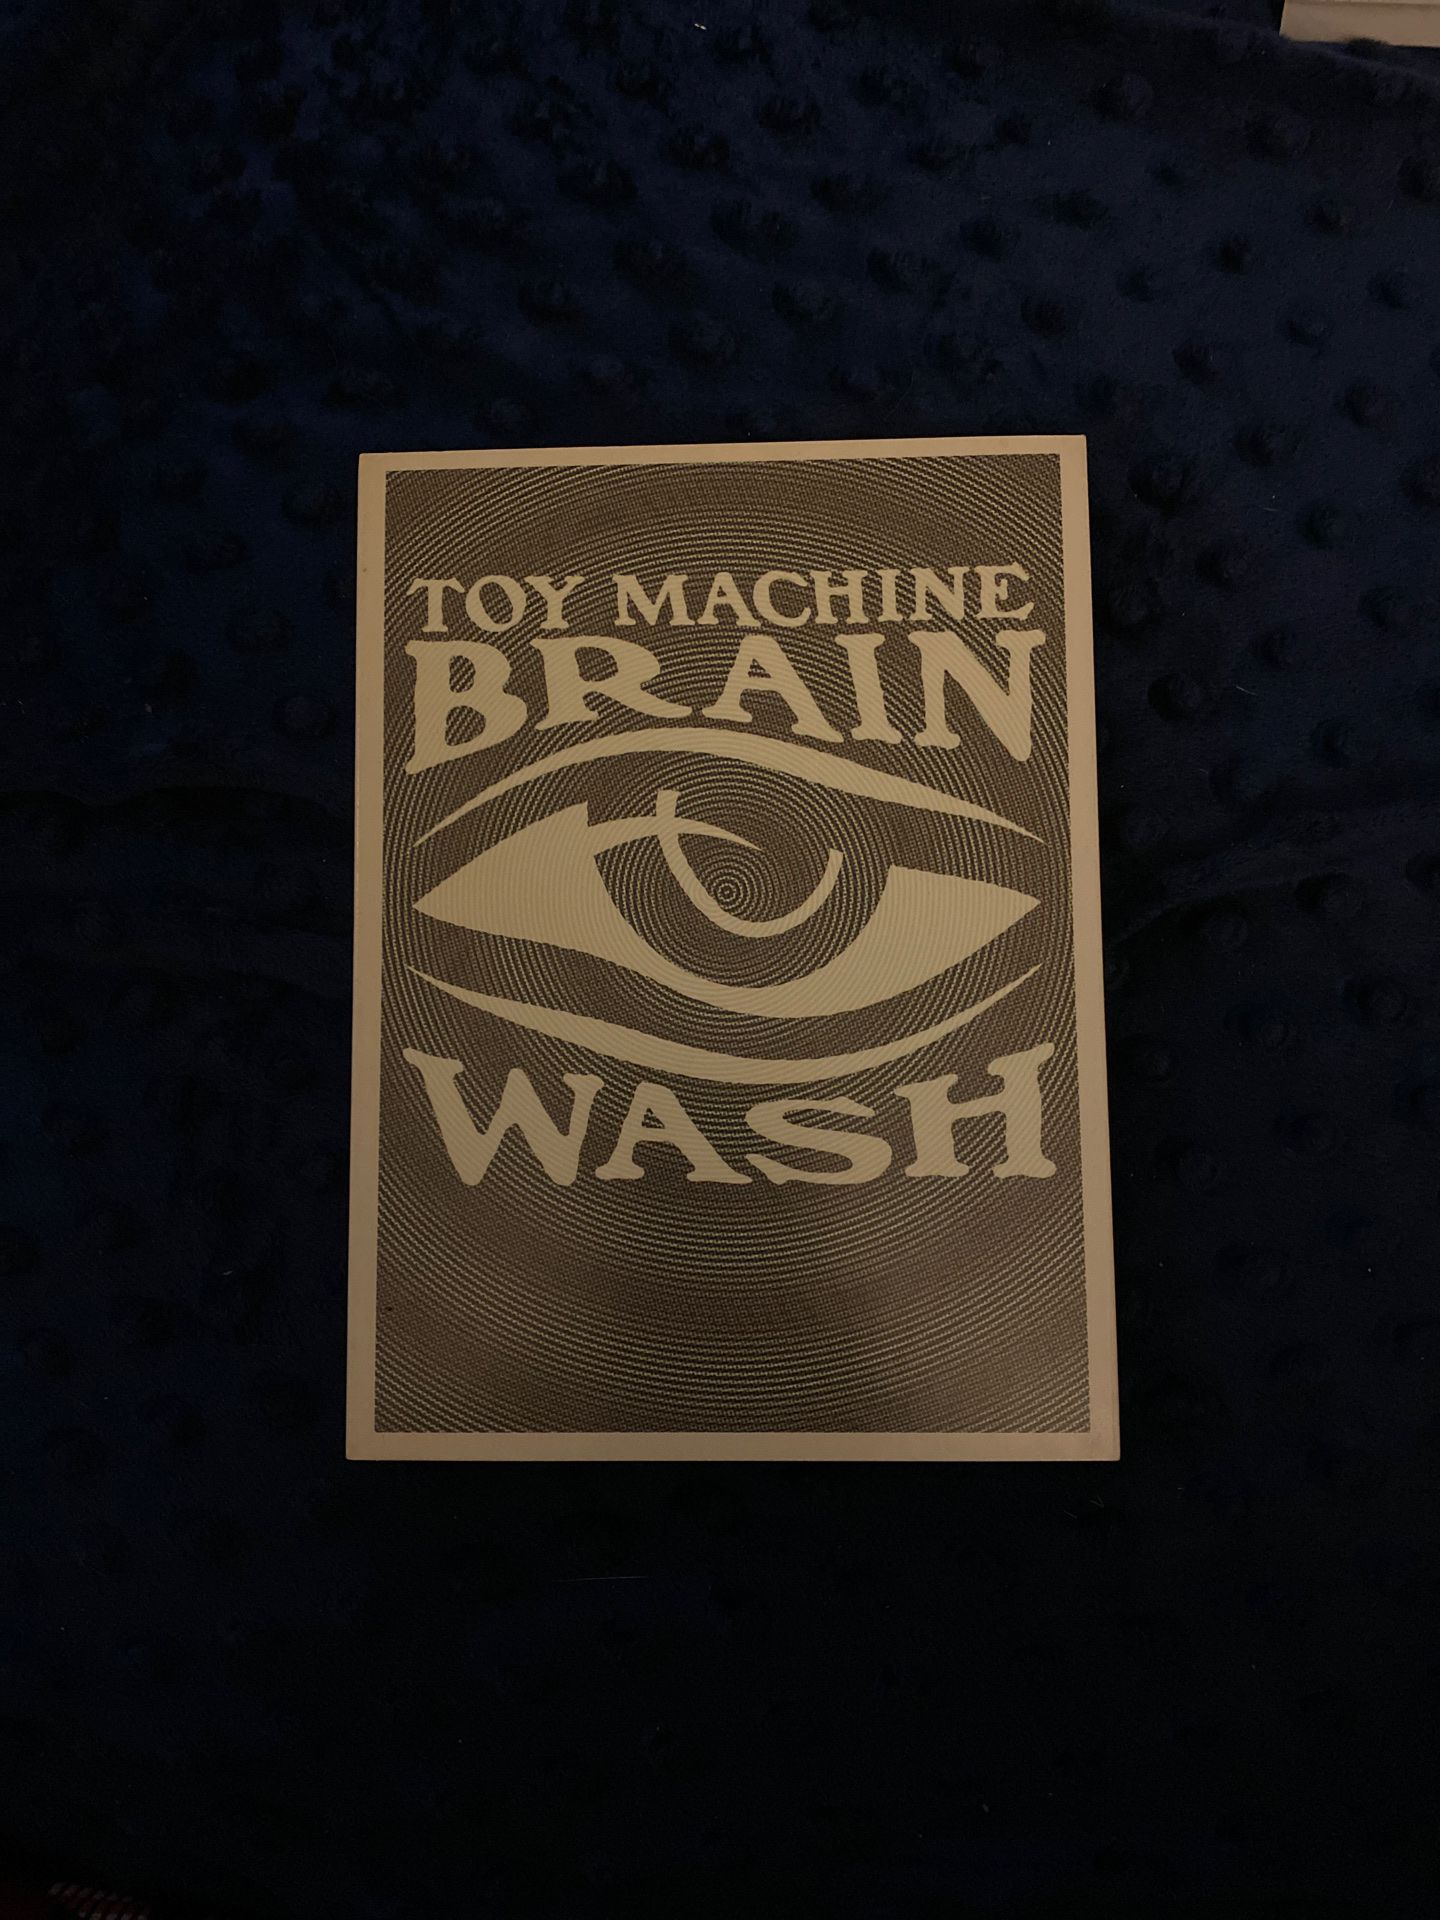 Toy Machine skateboarding DVD